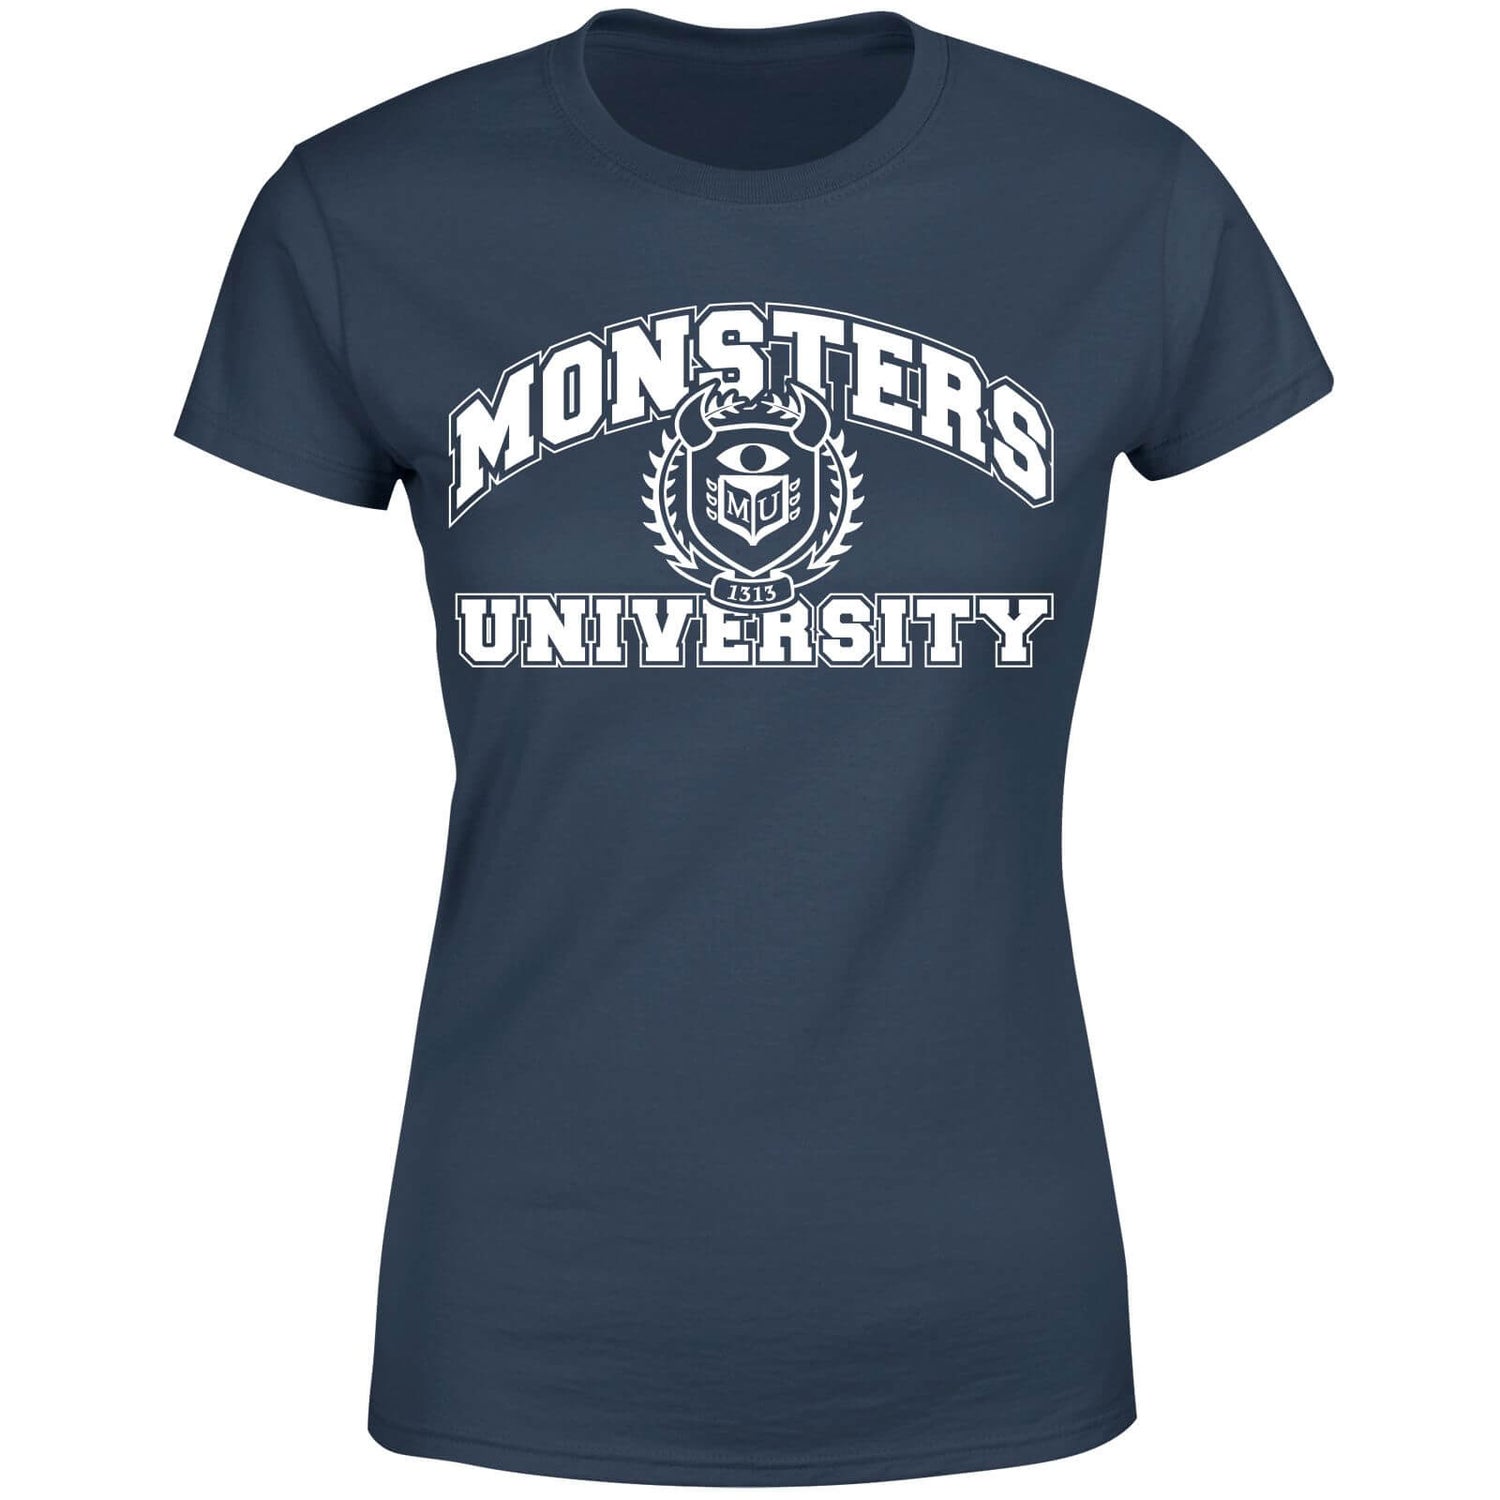 Monsters Inc. Monsters University Student Women's T-Shirt - Navy